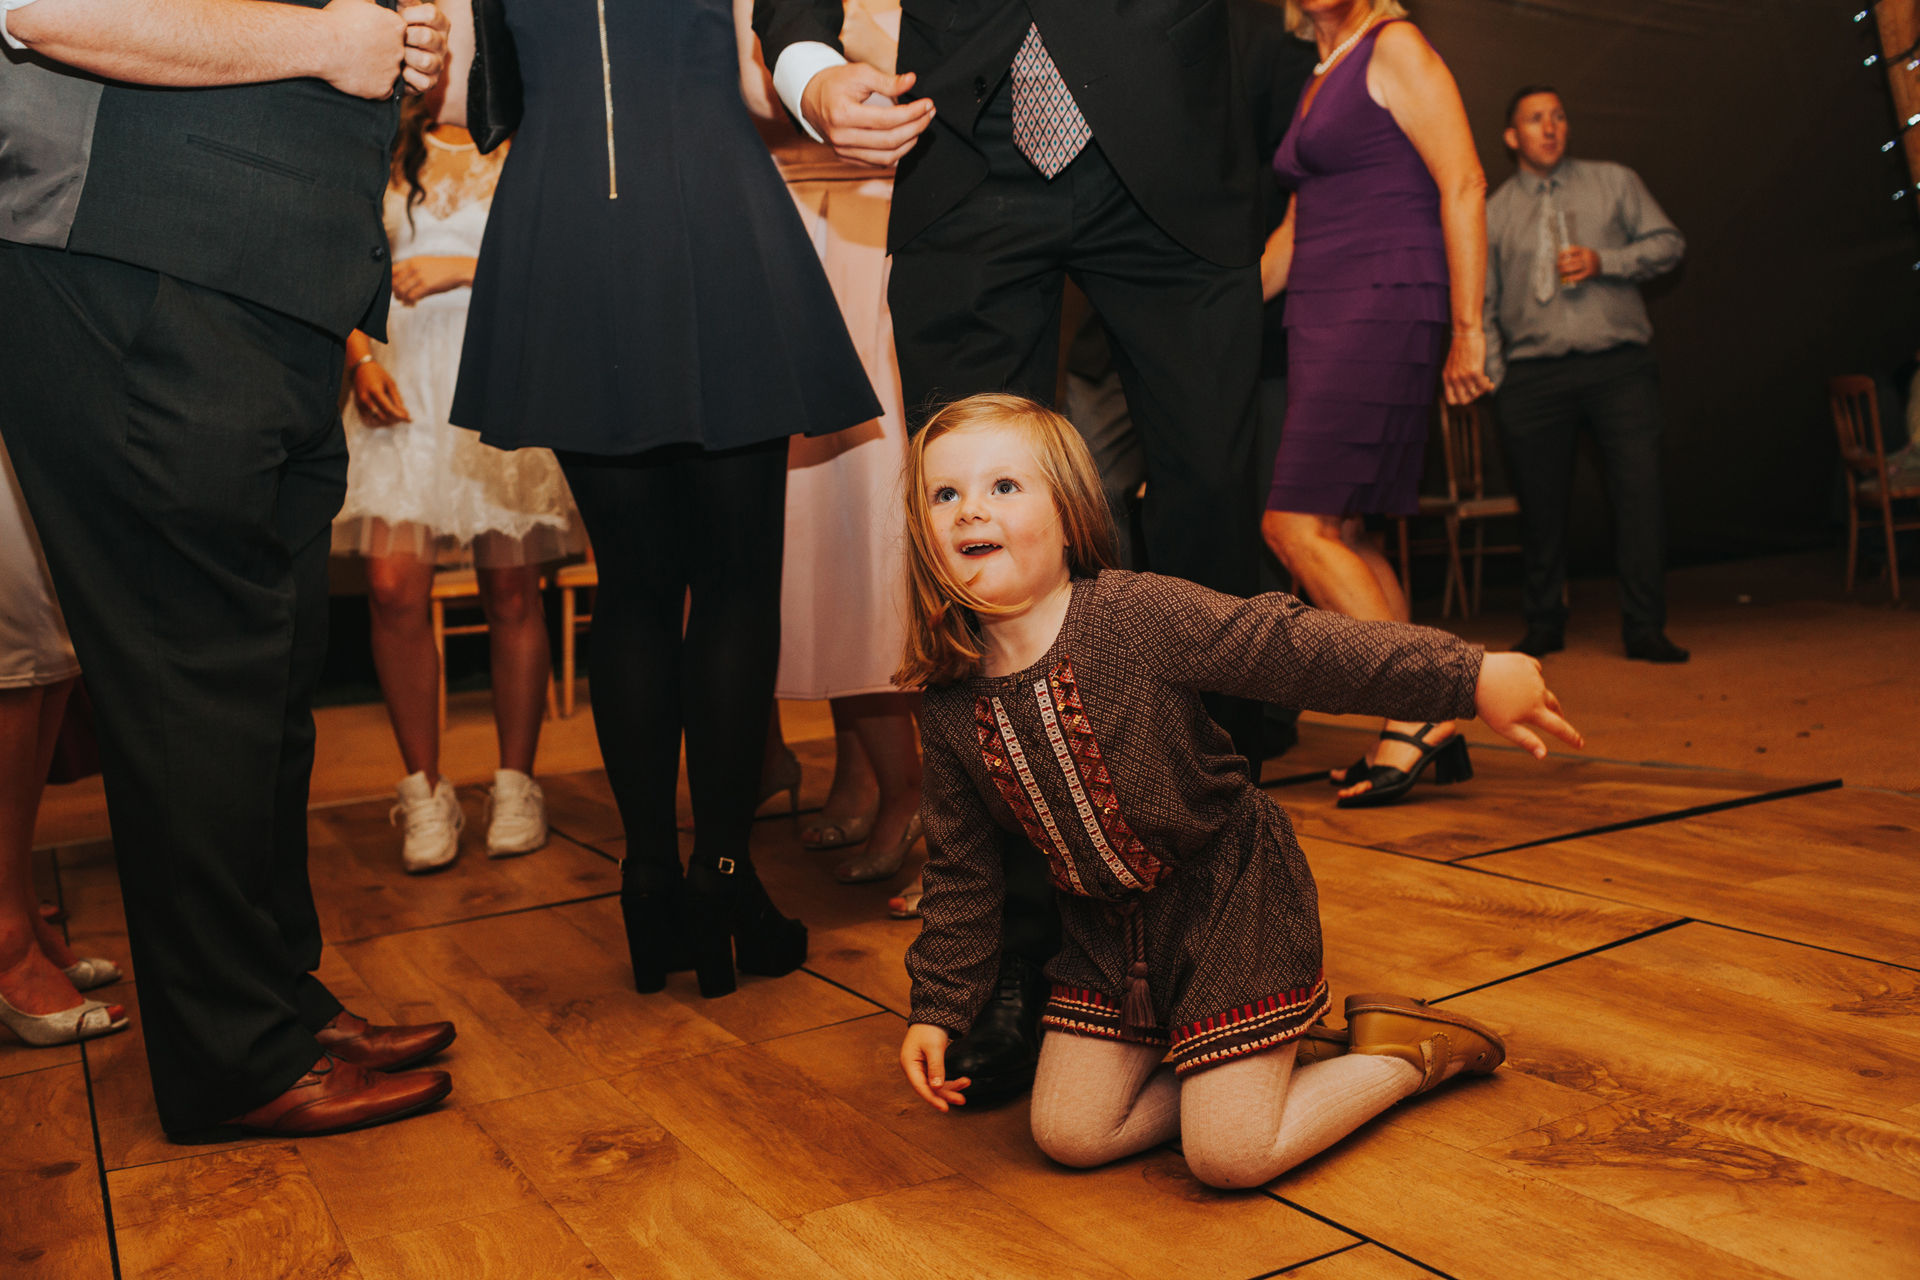 Child on the dance floor. 